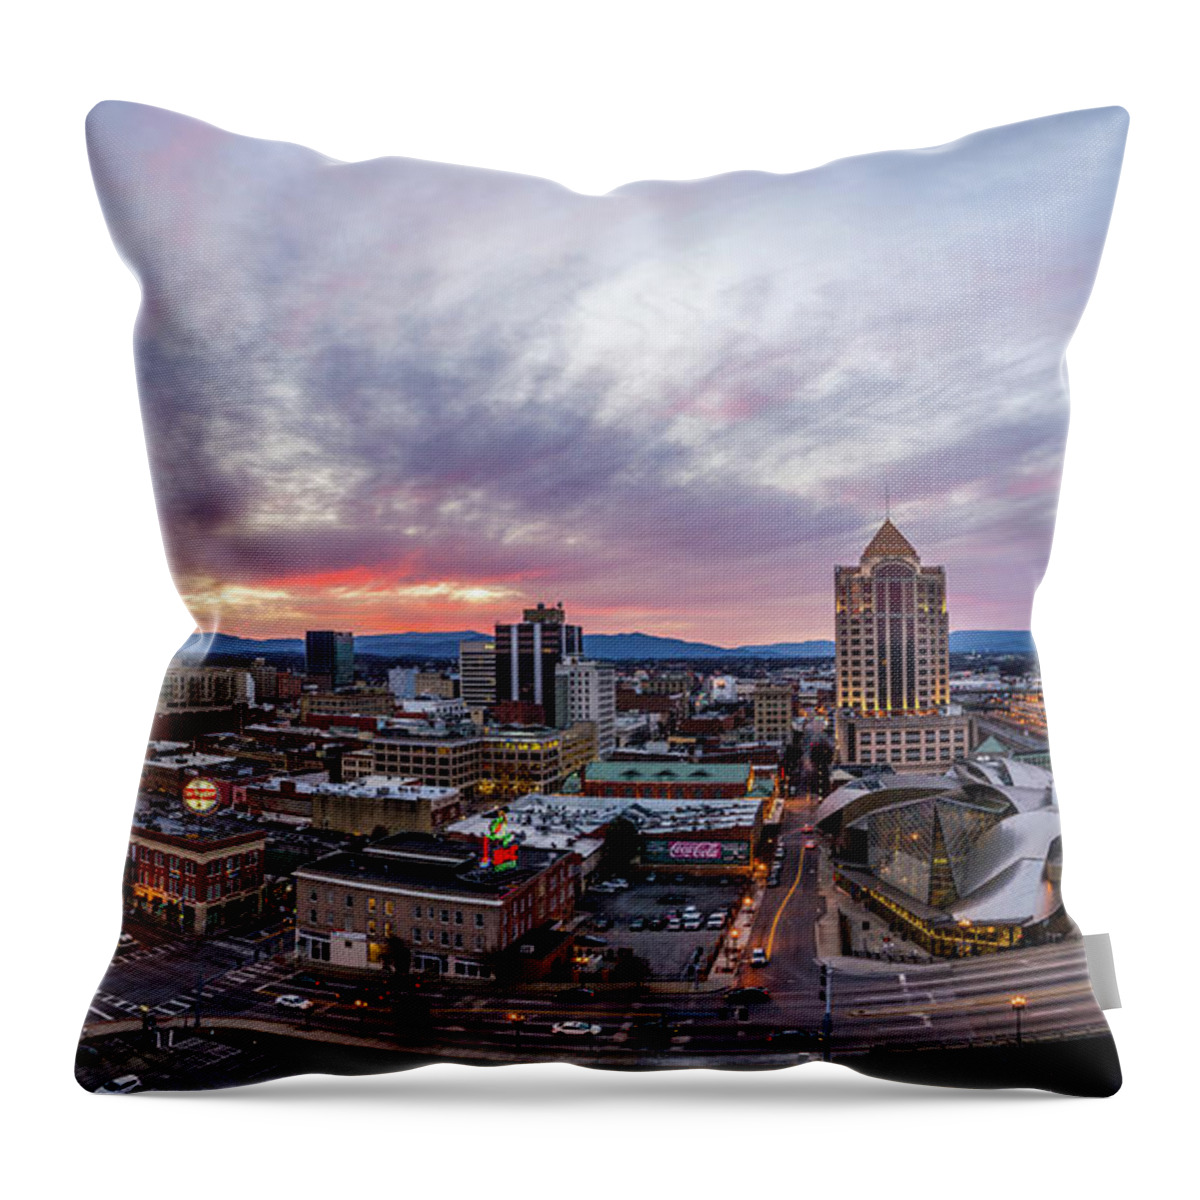 Panoramic Throw Pillow featuring the photograph Roanoke Evening Panoramic by Star City SkyCams